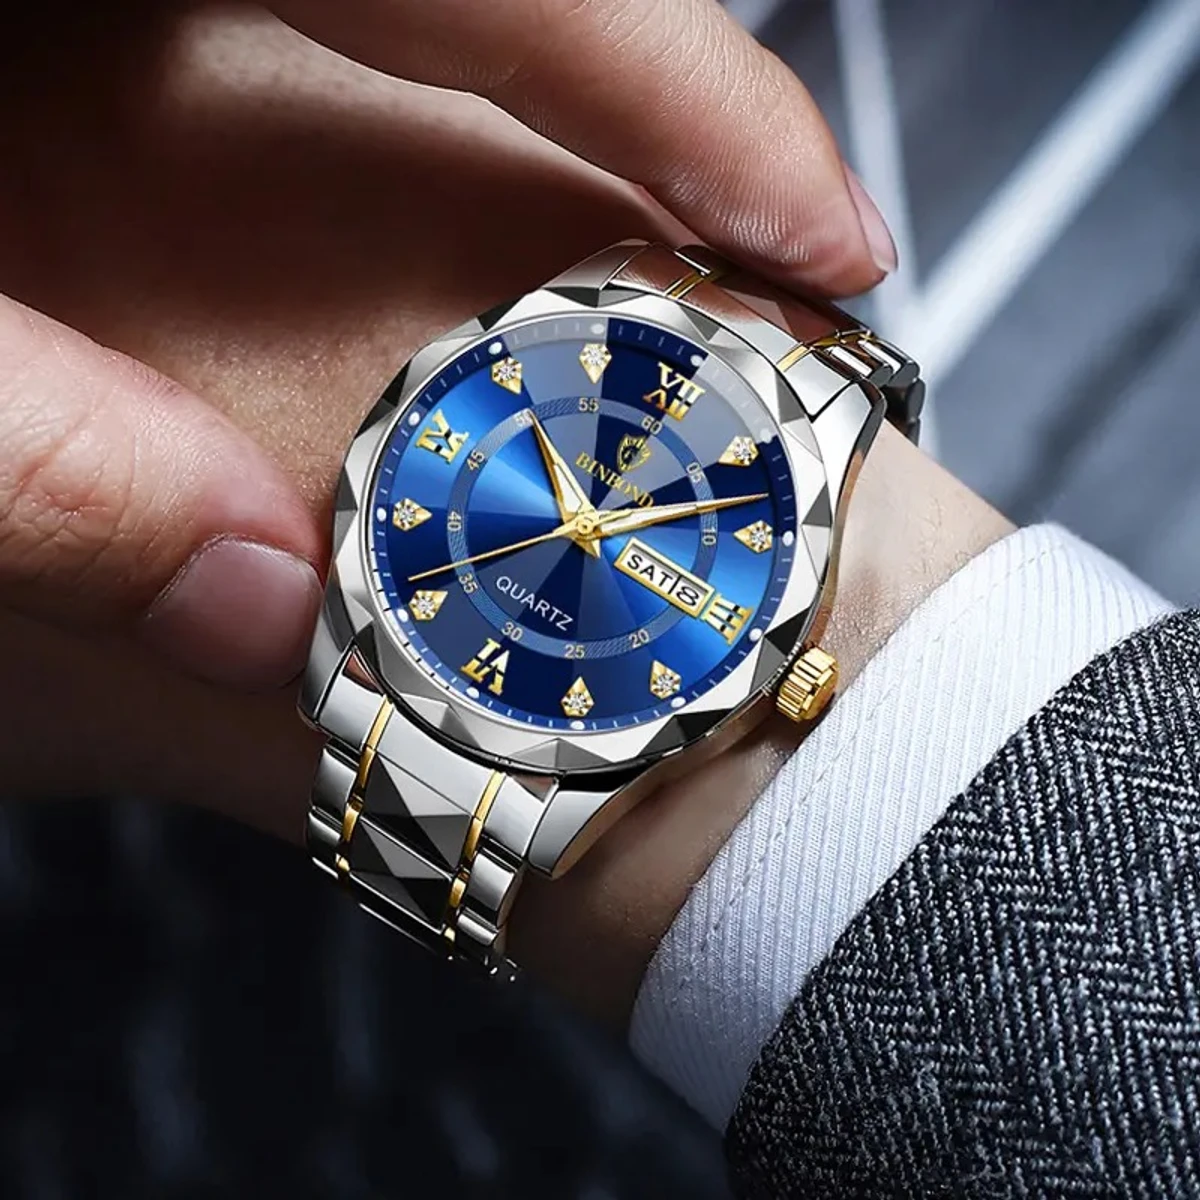 Luxury Binbond authentic men's watch waterproof night light dual calendar watch men's quartz watch diamond ceiling glass- Silver & Blue